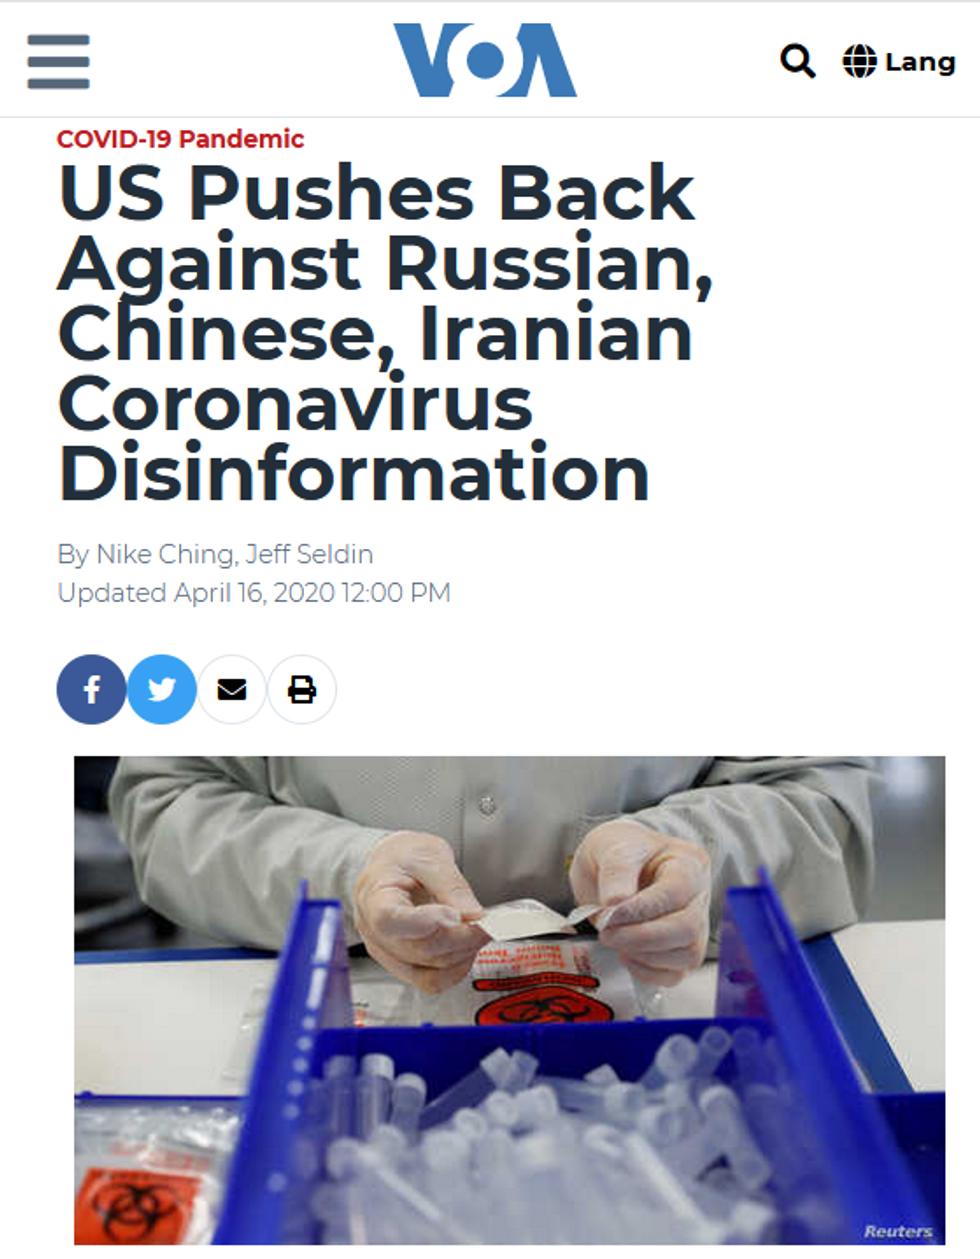 VOA::US Pushes Back Against Russian, Chinese, Iranian Coronavirus Disinformation